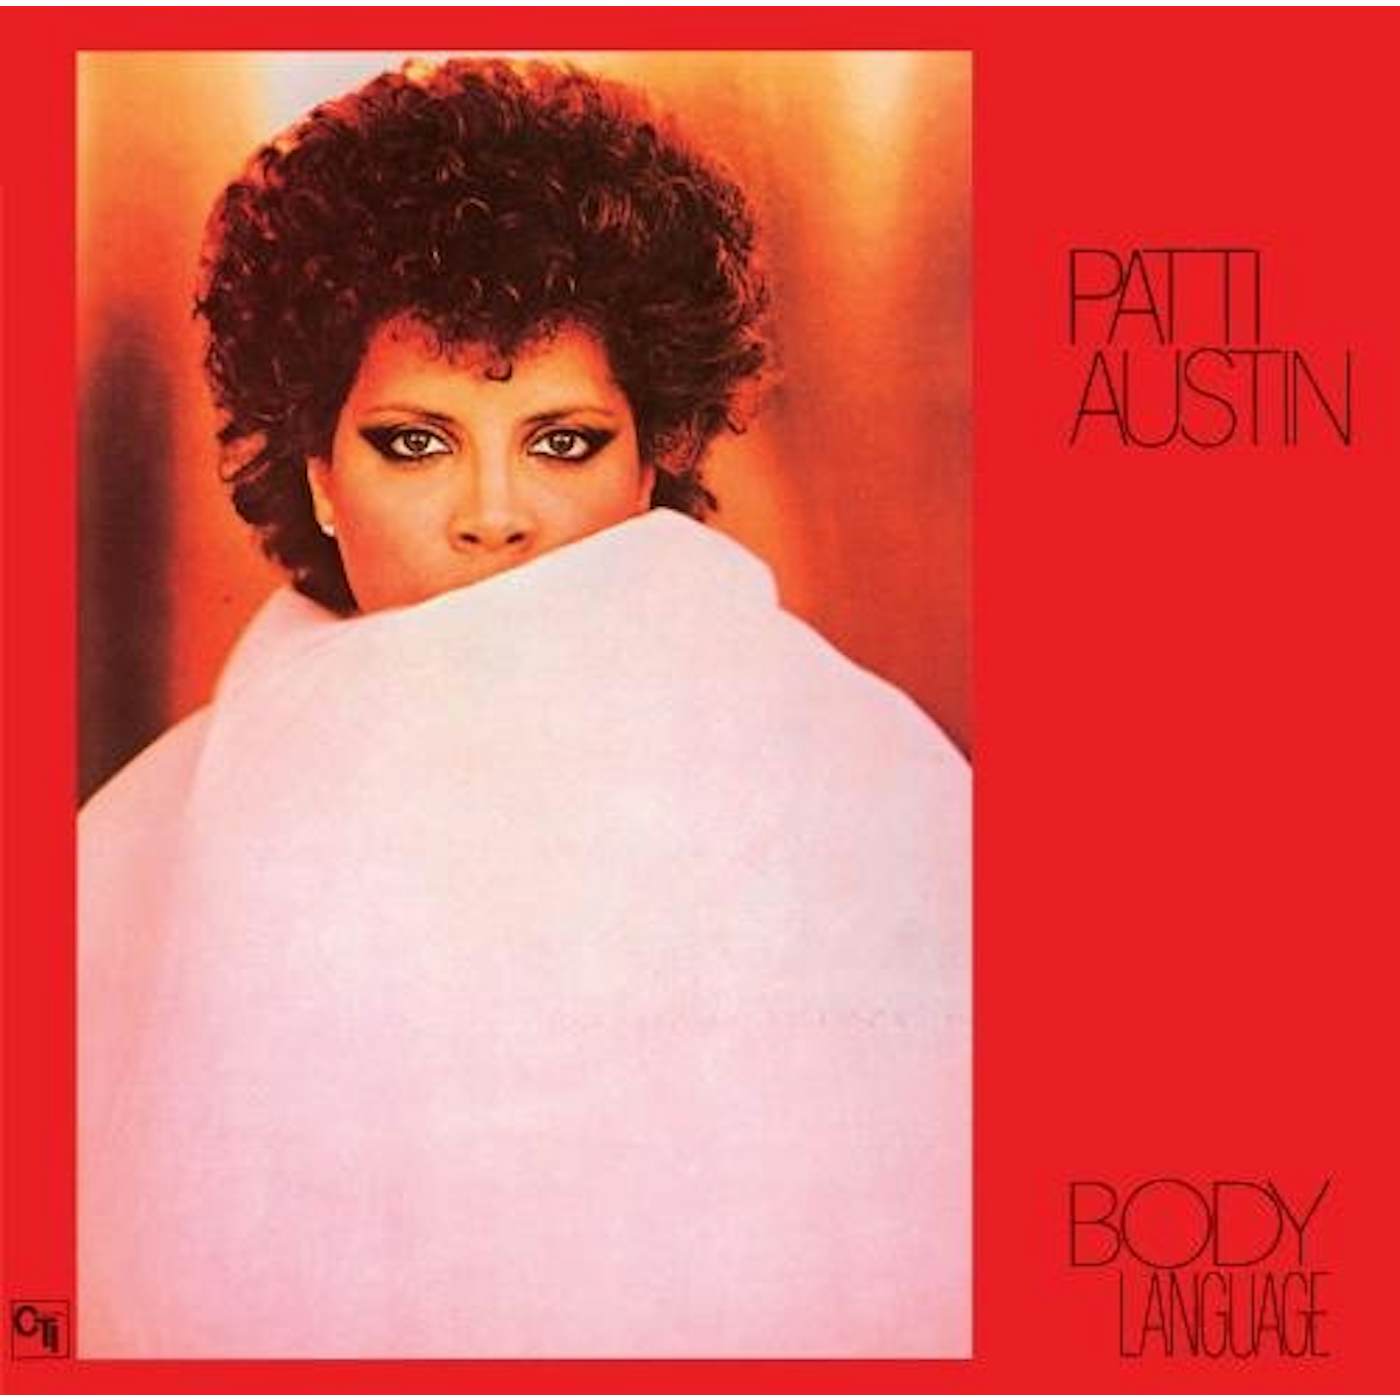 Patti Austin BODY LANGUAGE (BLU SPEC/REMASTERED) CD